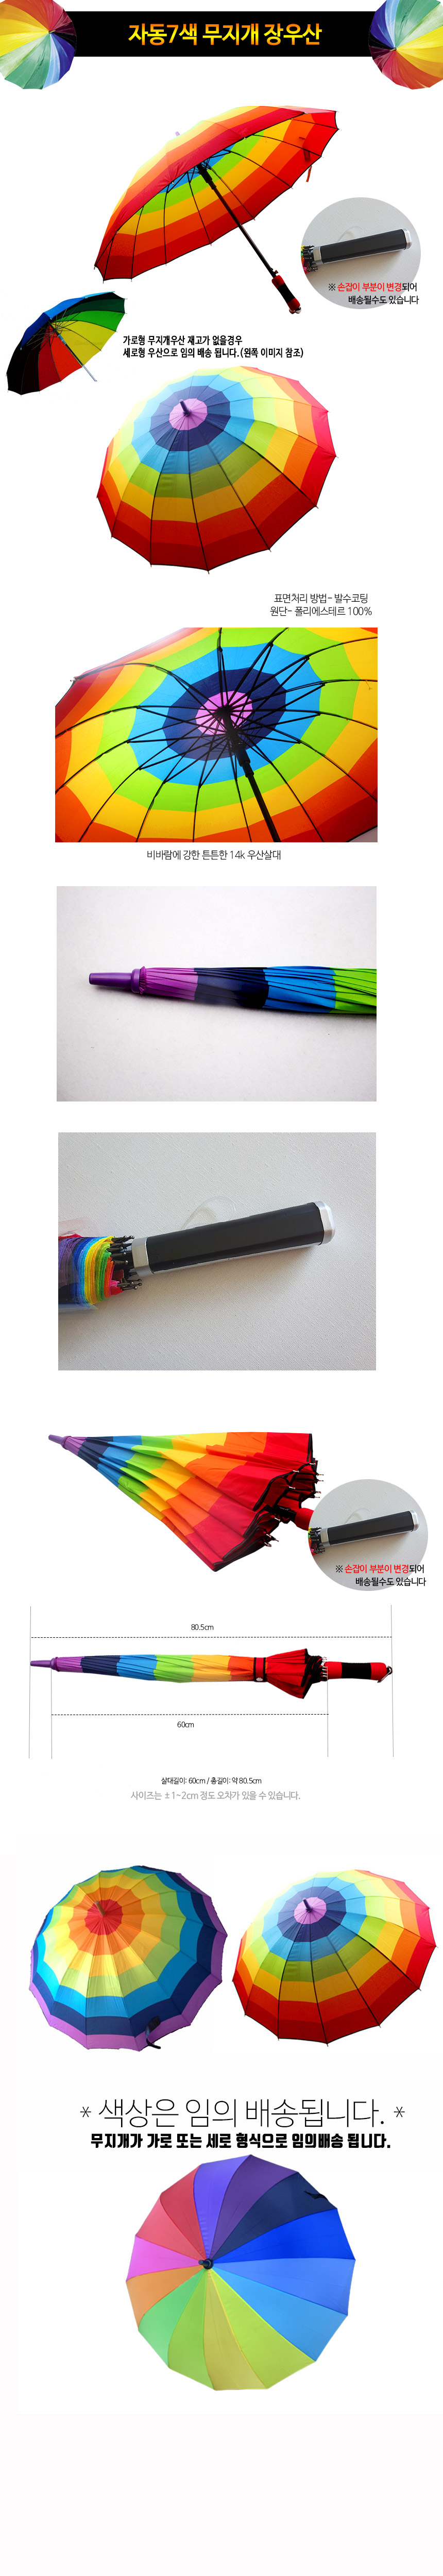 rainbow_umbrella14.jpg